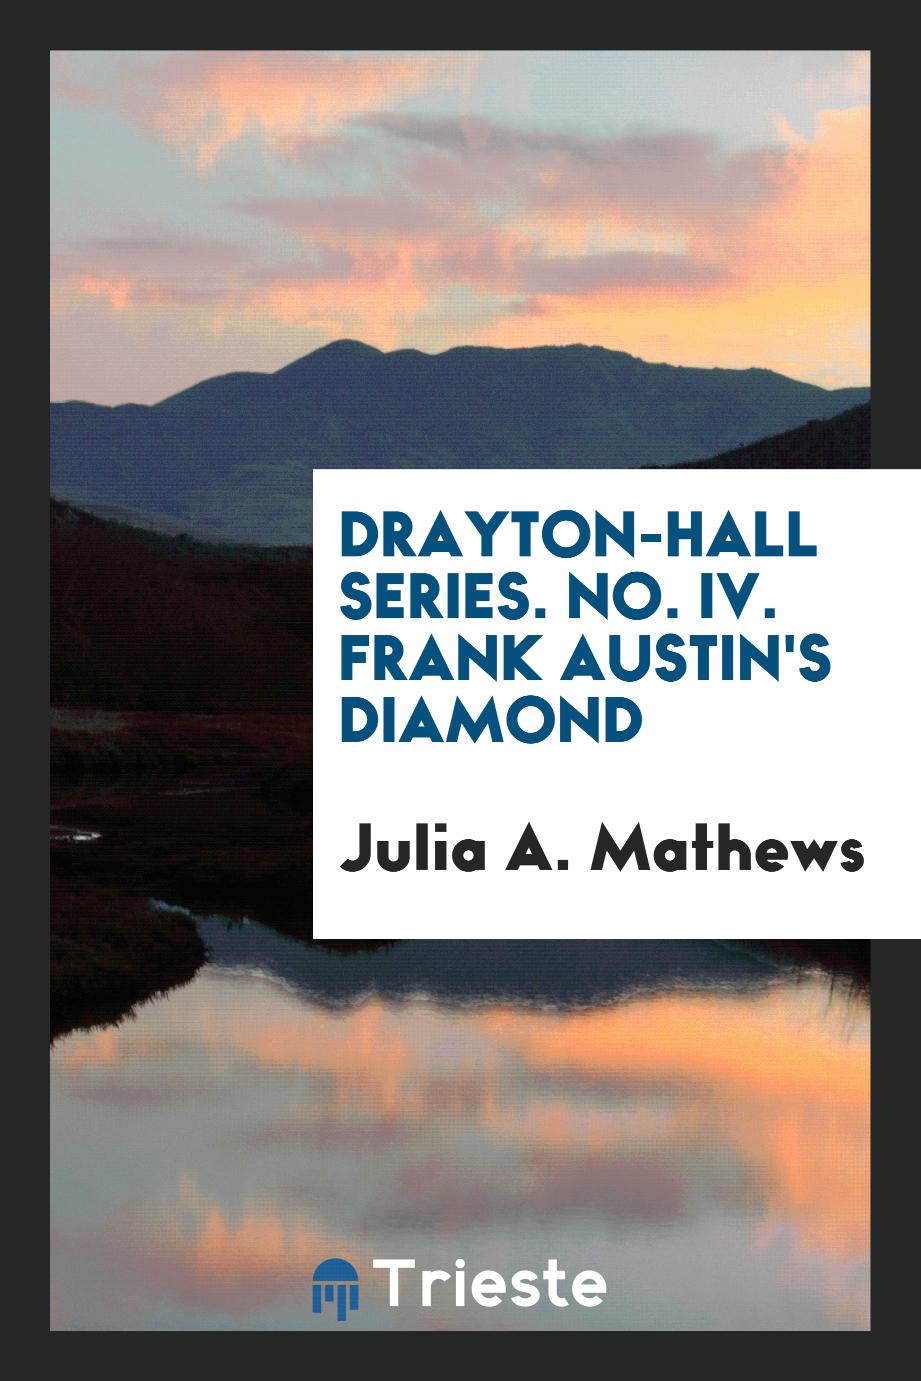 Drayton-Hall series. No. IV. Frank Austin's diamond